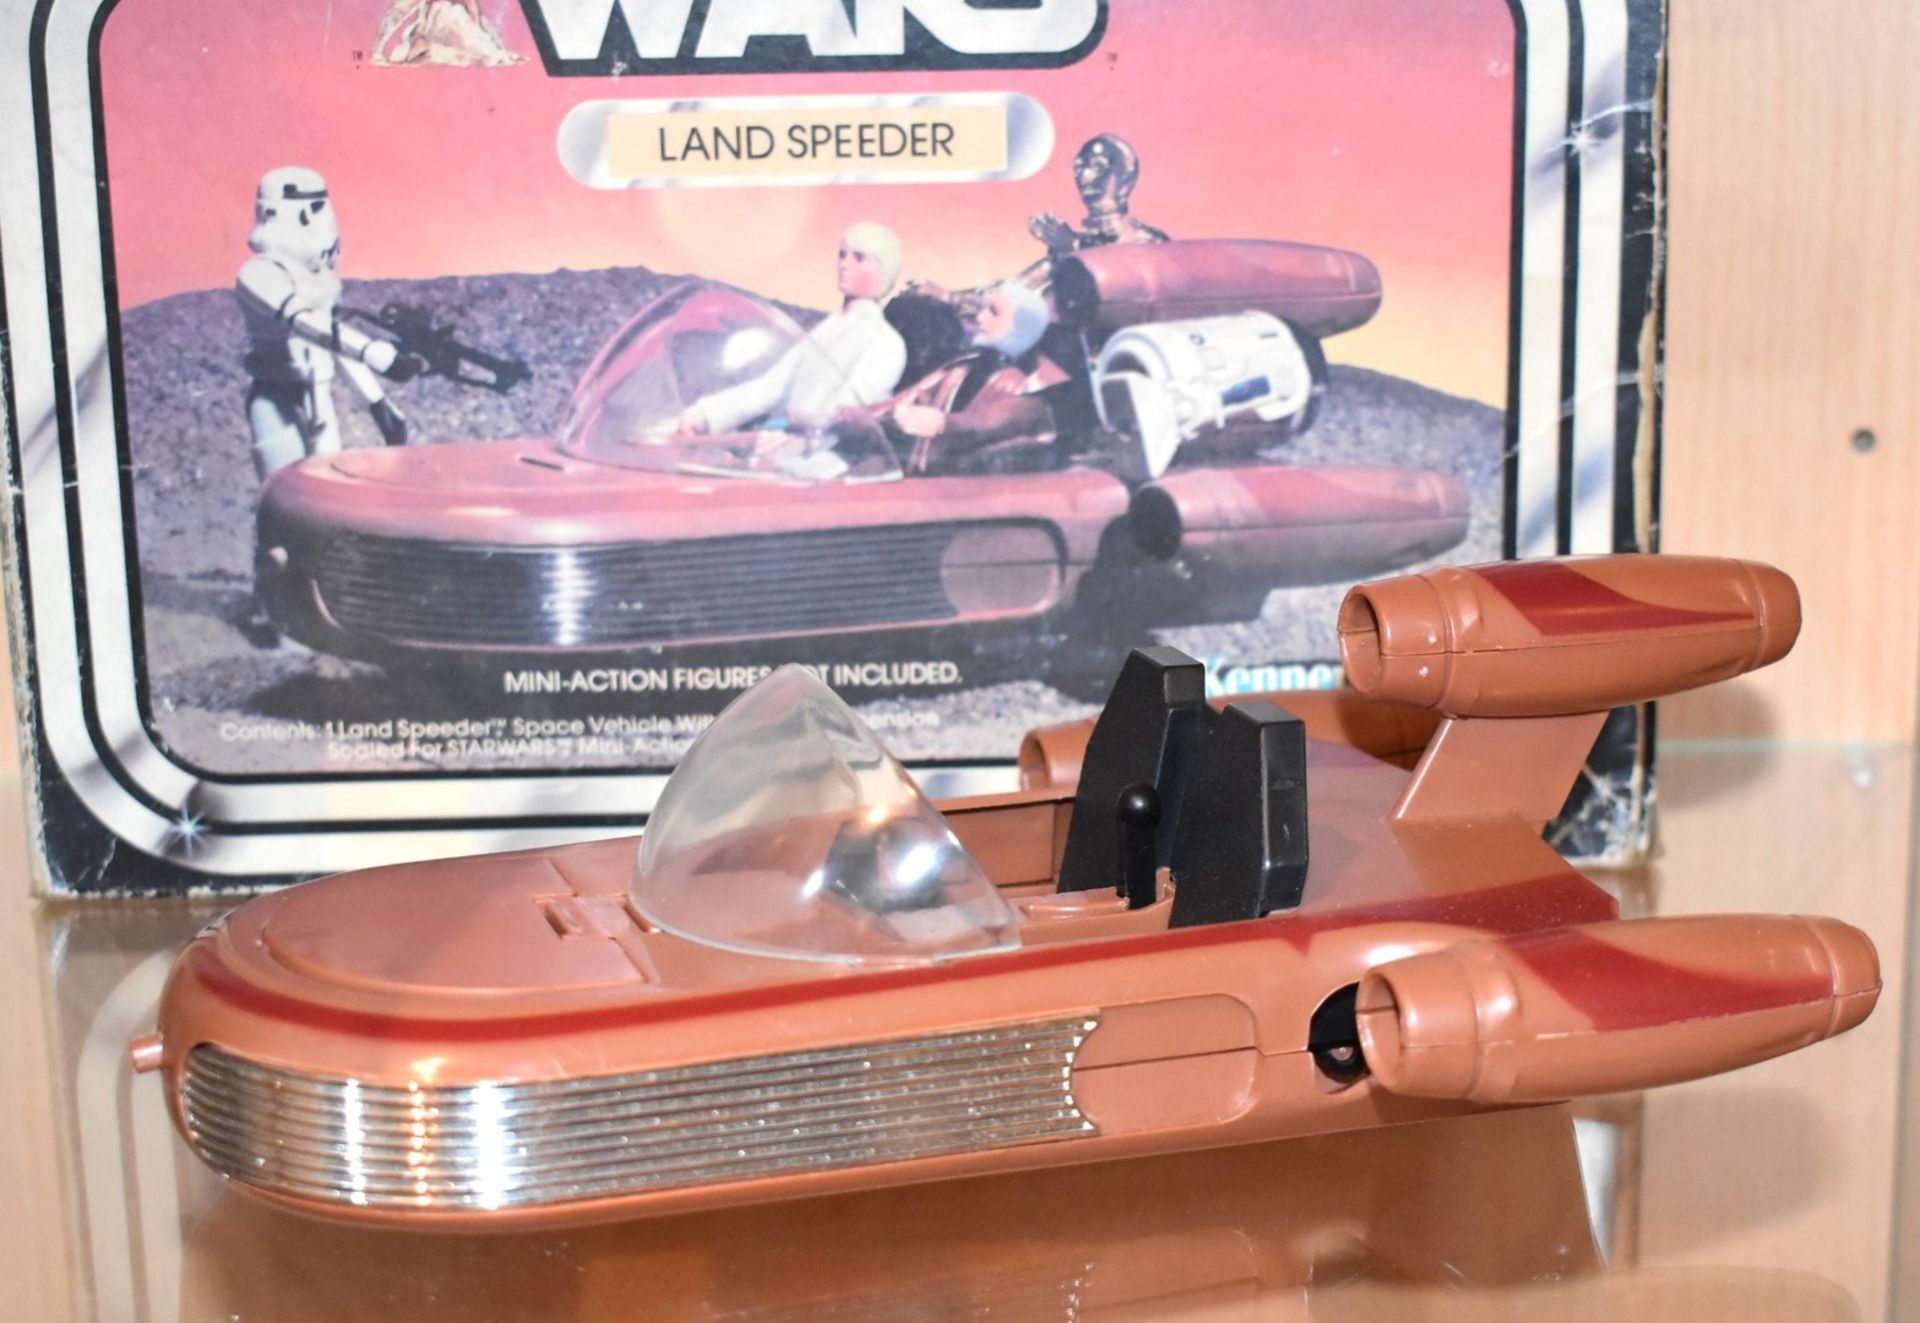 1 x Vintage 1978 Star Wars Land Speeder Toy - Very Good Condition With Original Box - Image 7 of 8